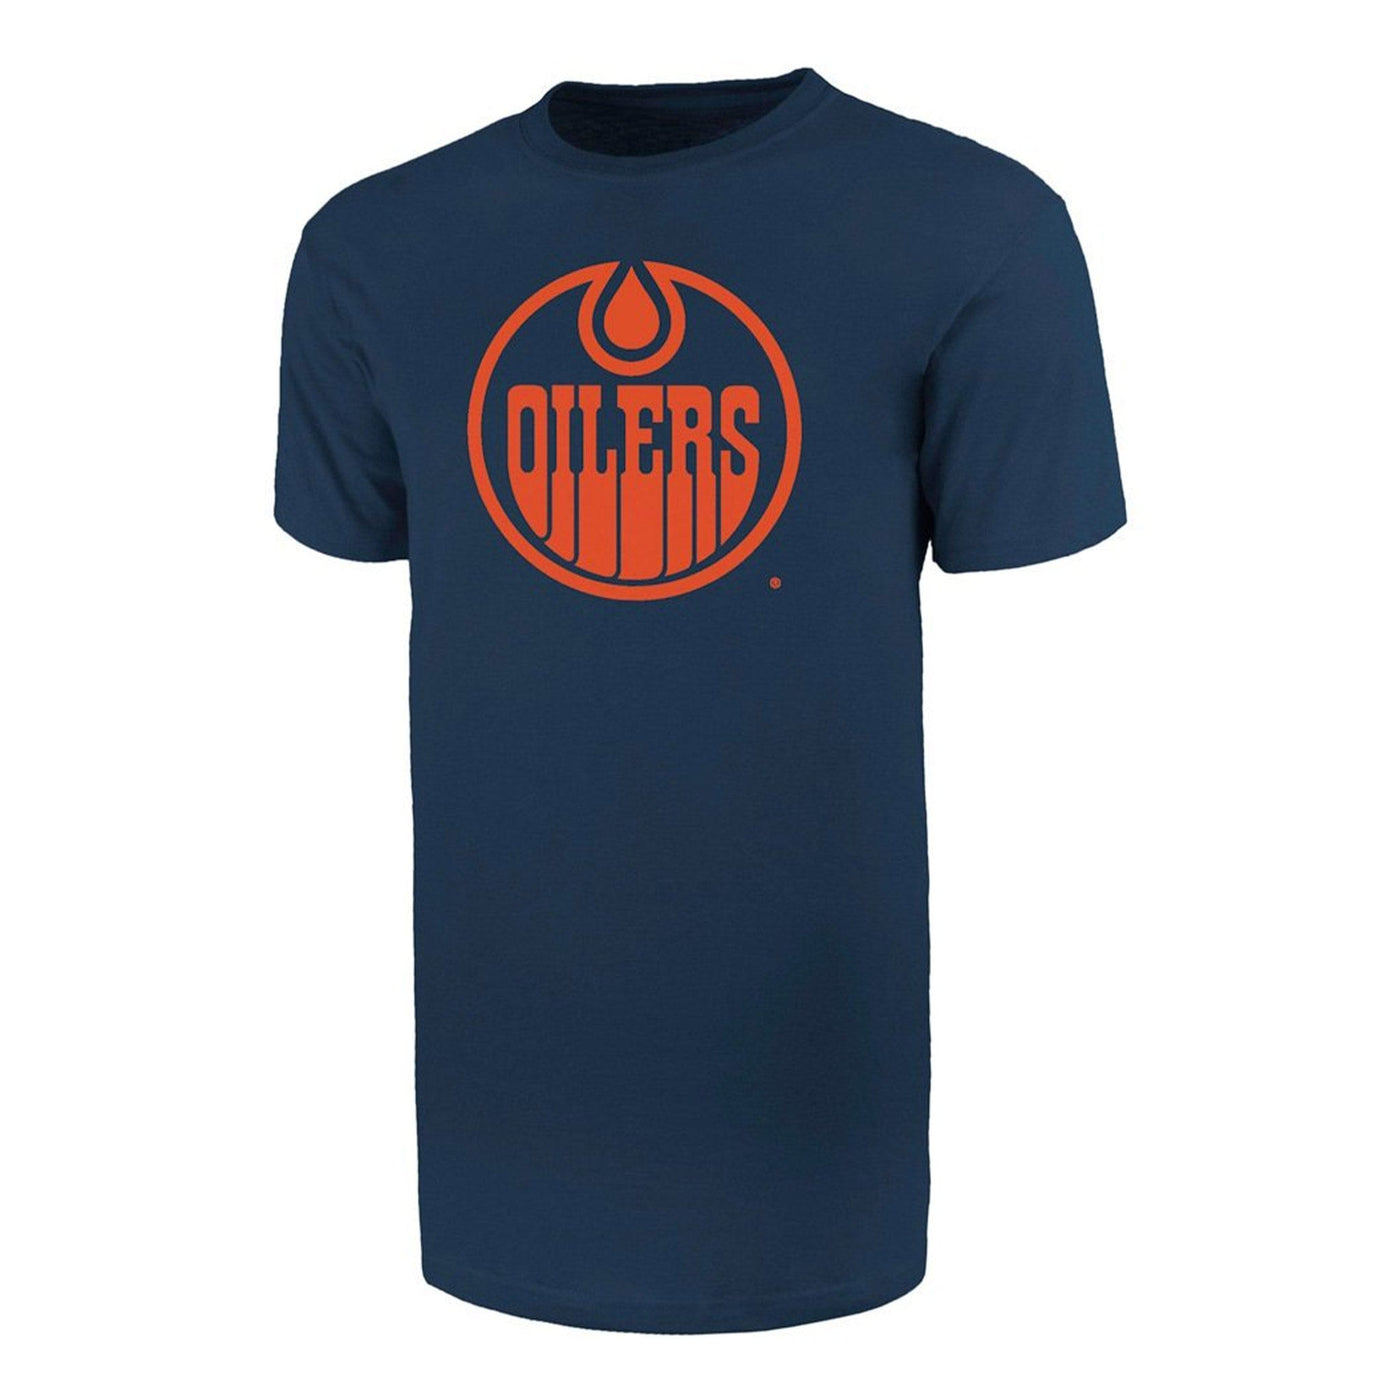 Edmonton Oilers 47 Brand Fan Tee Shirt Third Navy - The Hockey Shop Source For Sports